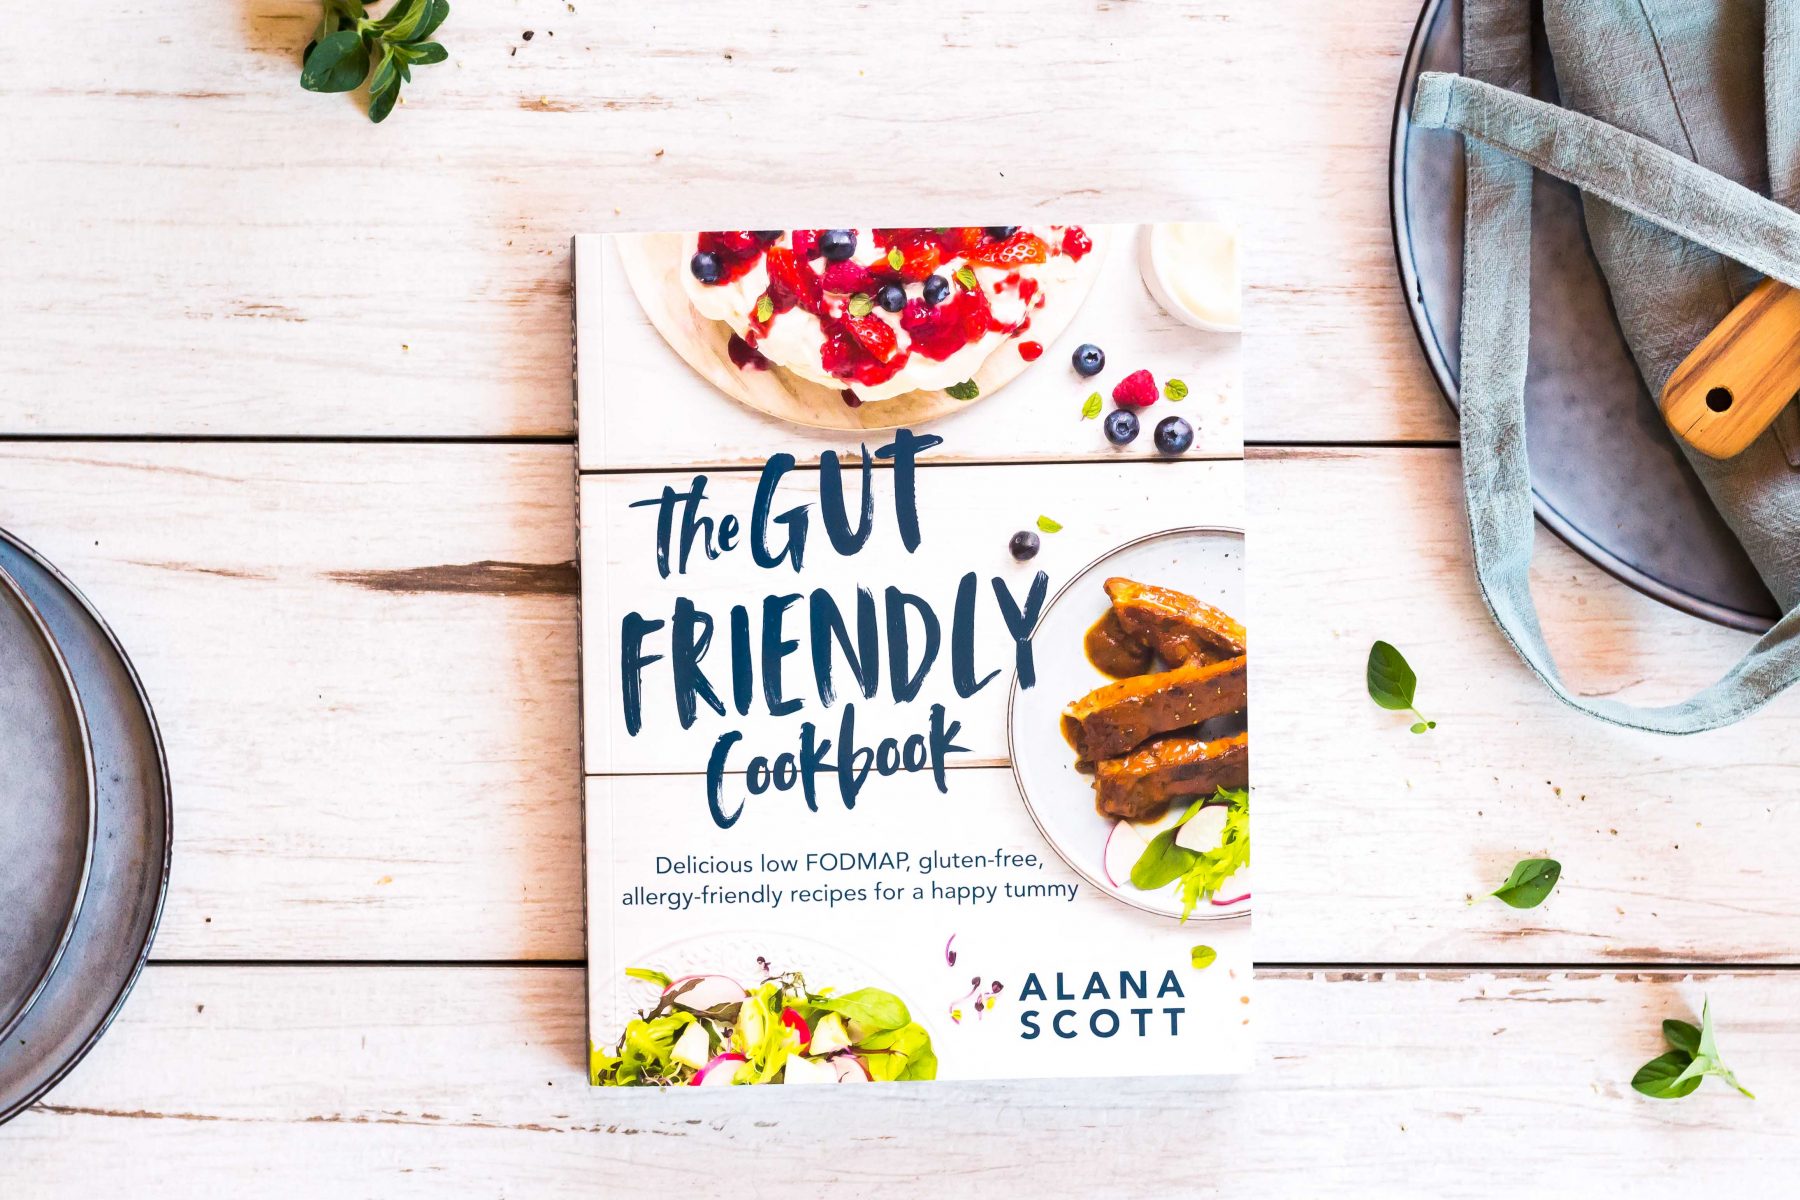 The-Gut-Friendly-Cookbook-Low-FODMAP-Cookbook